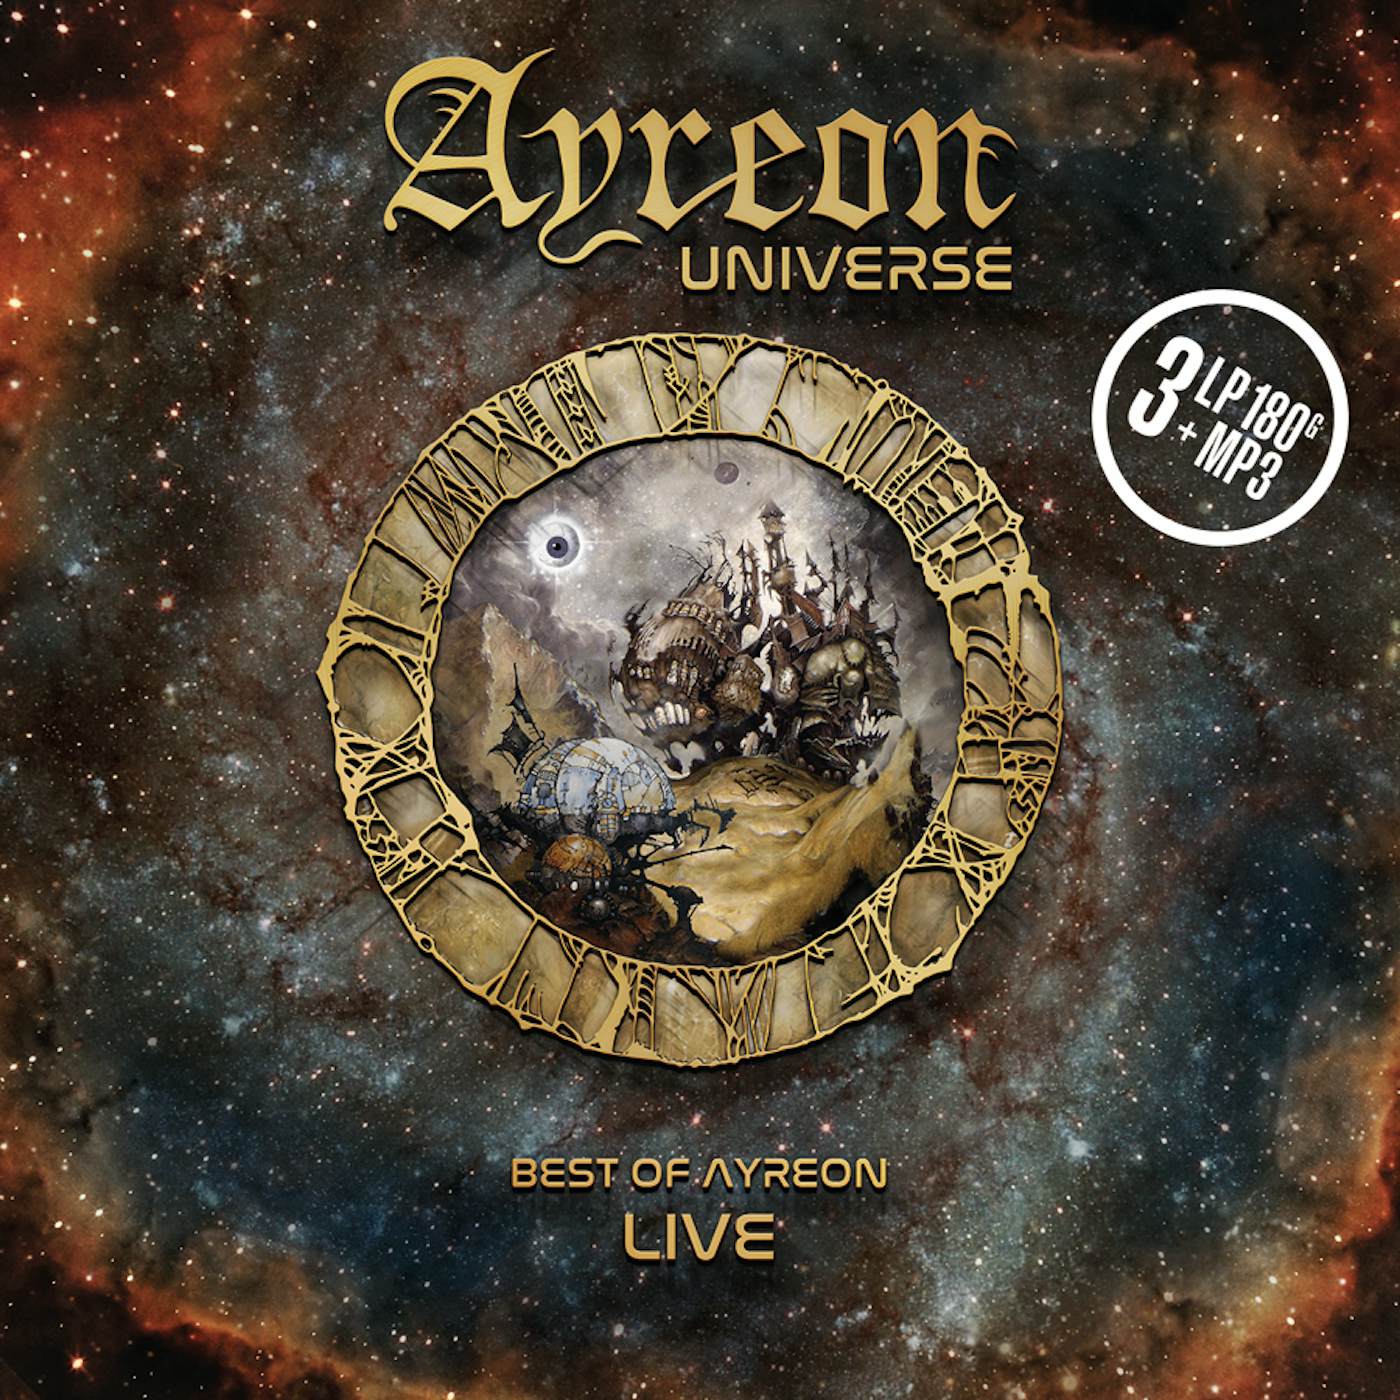 AYREON UNIVERSE Vinyl Record